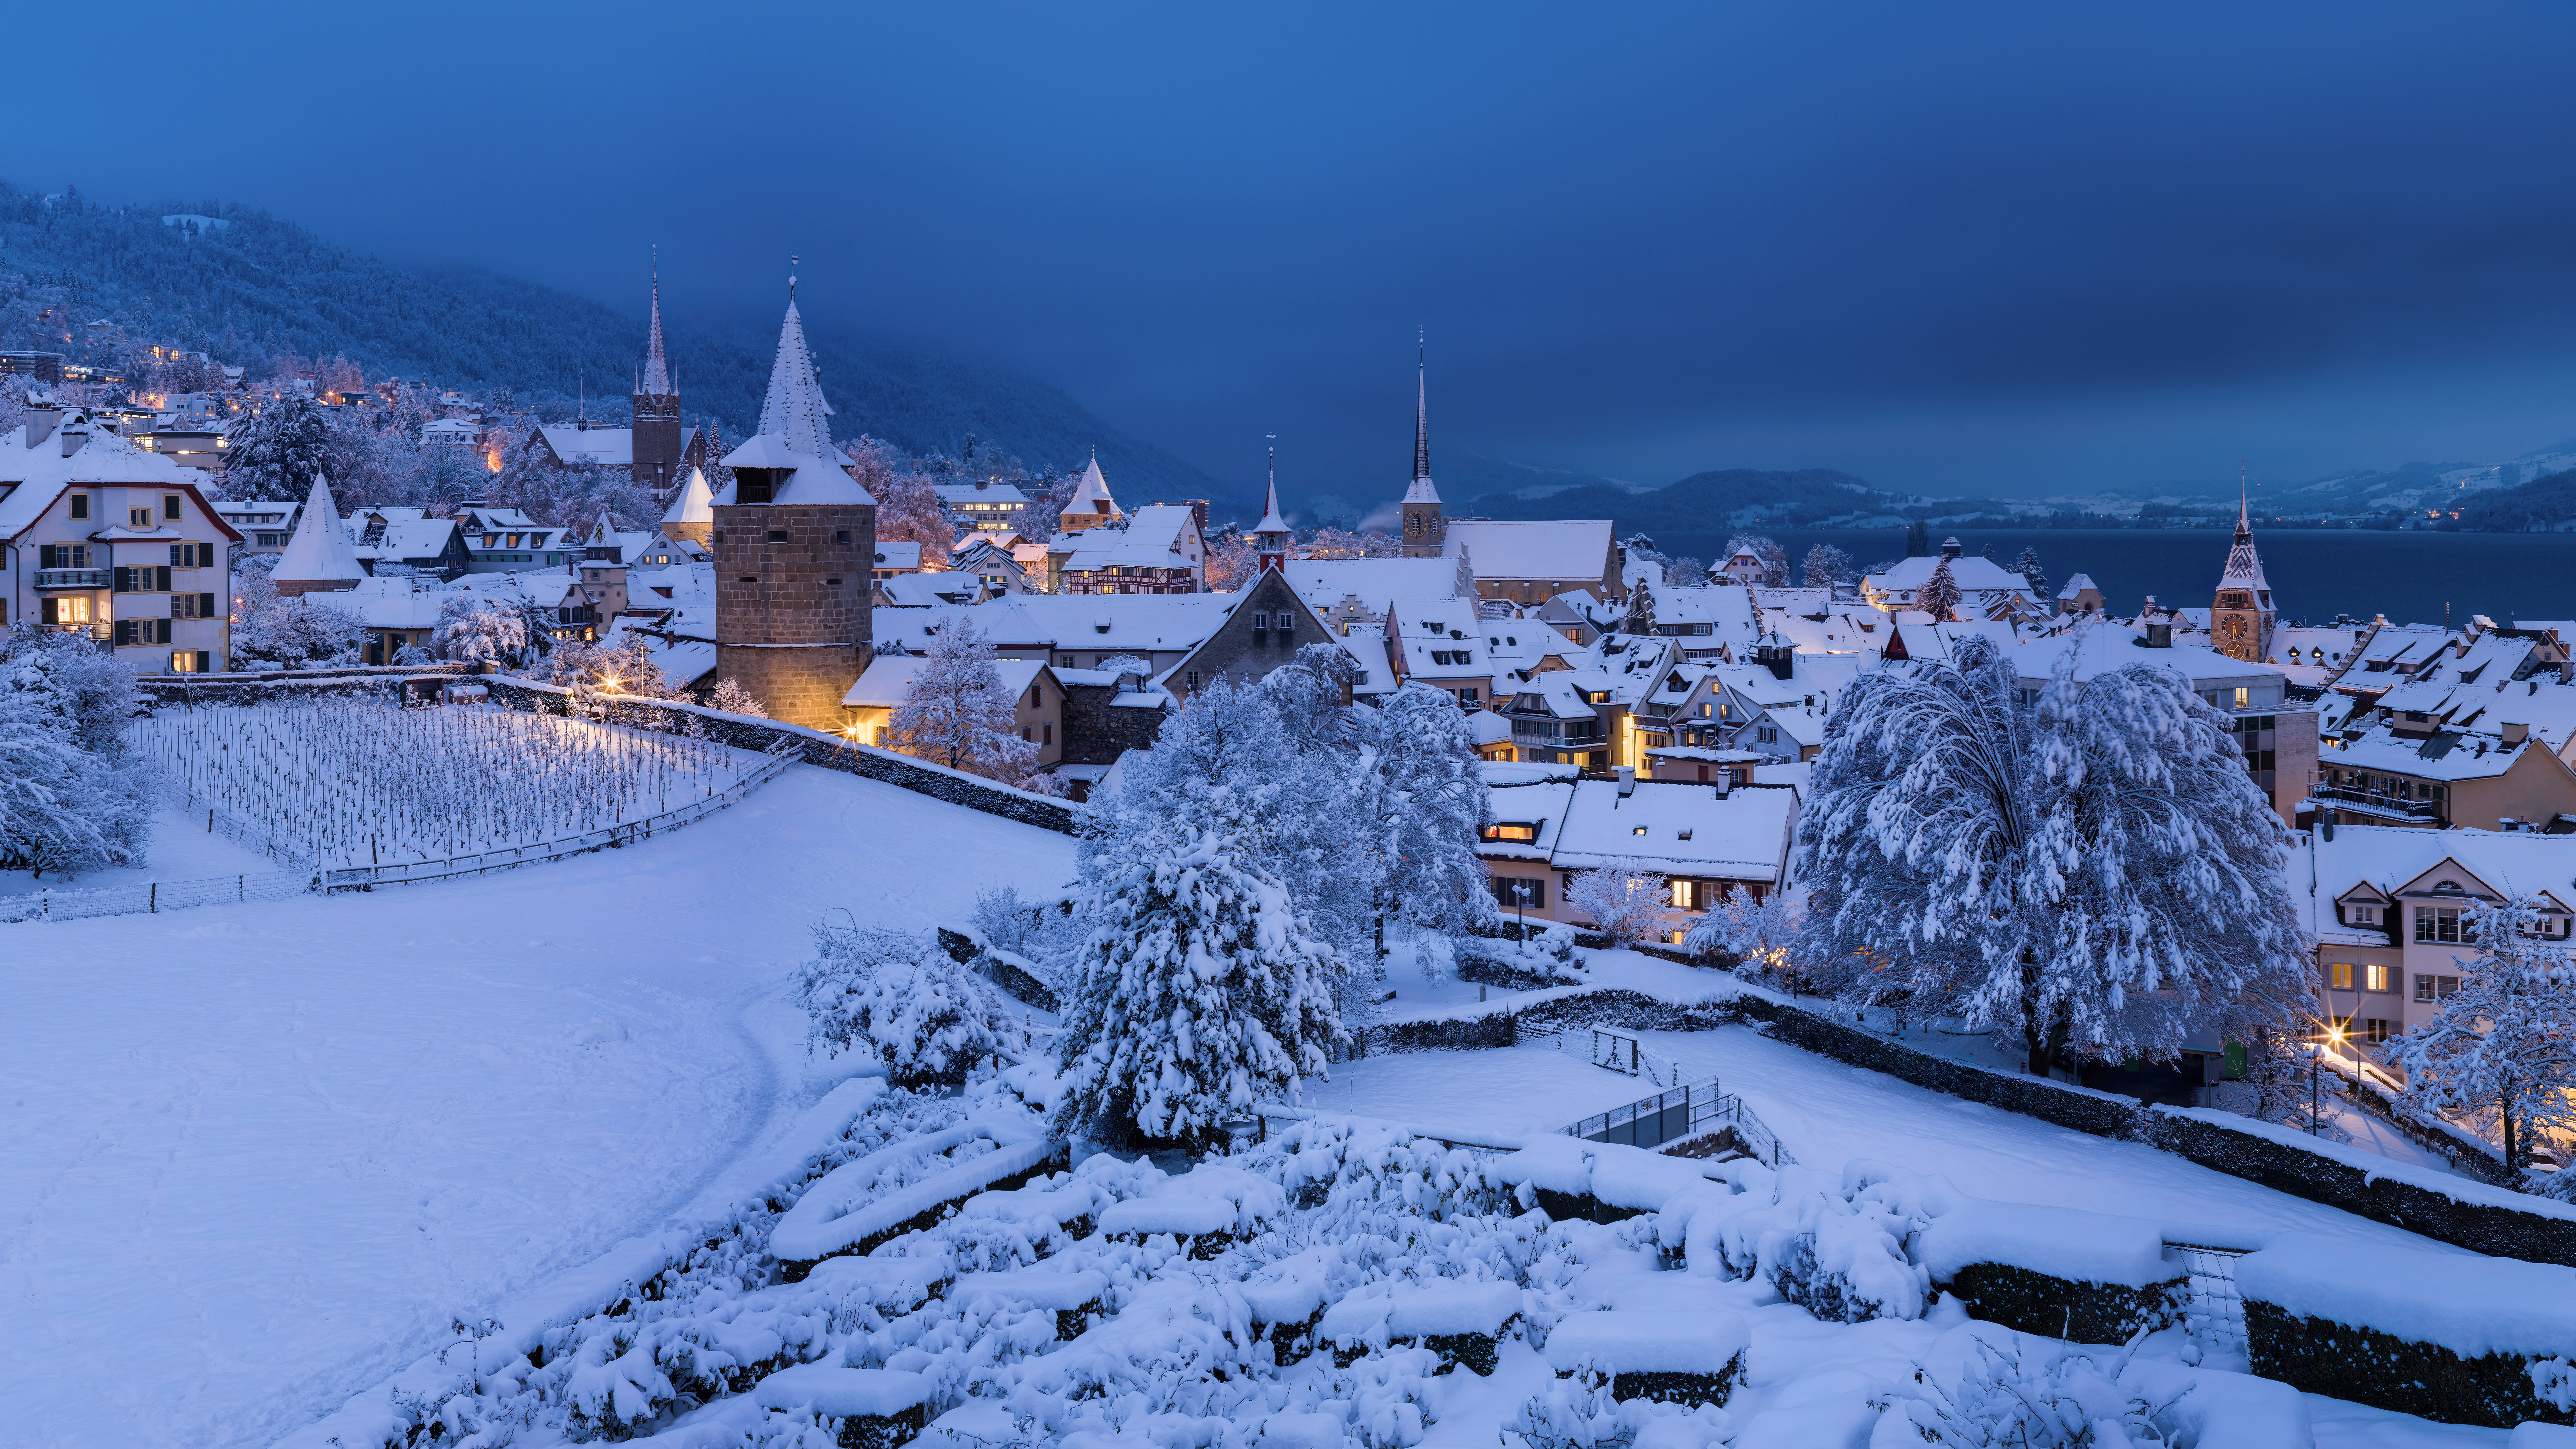 Winter Snow City Switzerland Photography 8192x4608